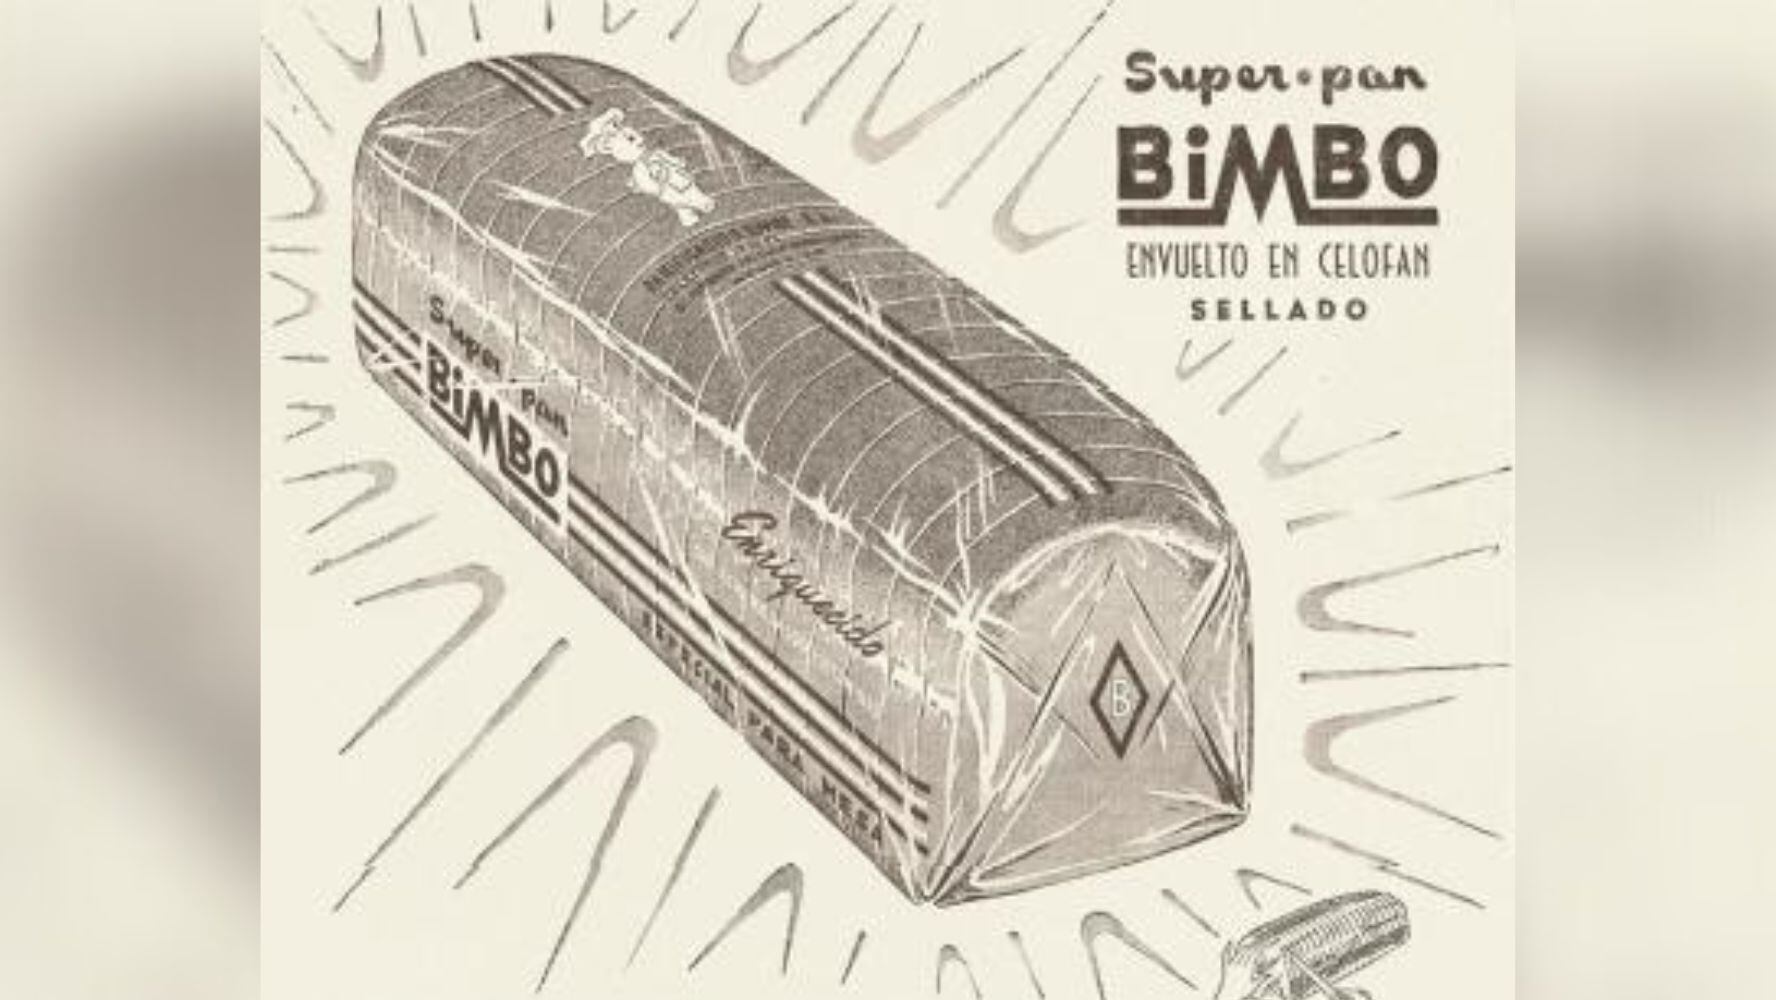 El pan de Bimbo se caracteriza por su envoltura de celofán. (Foto: Grupo Bimbo)